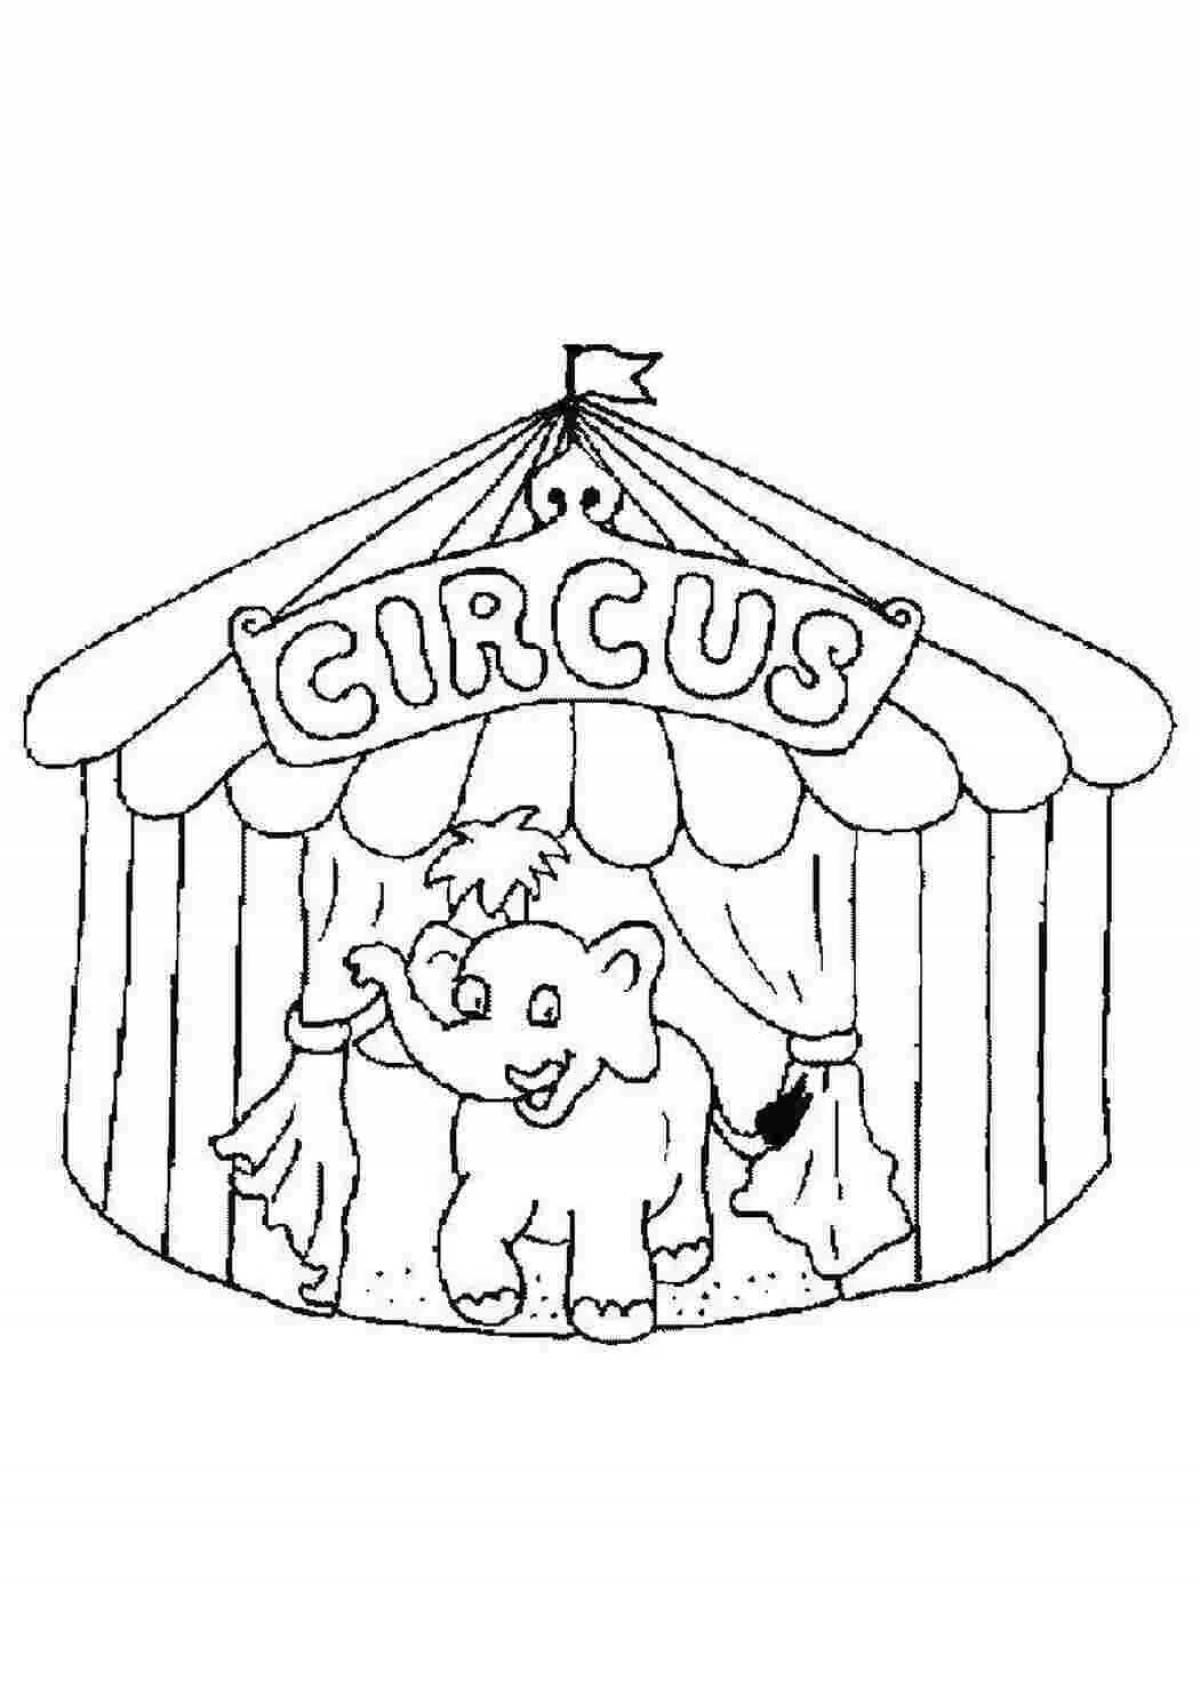 Rampant circus coloring page